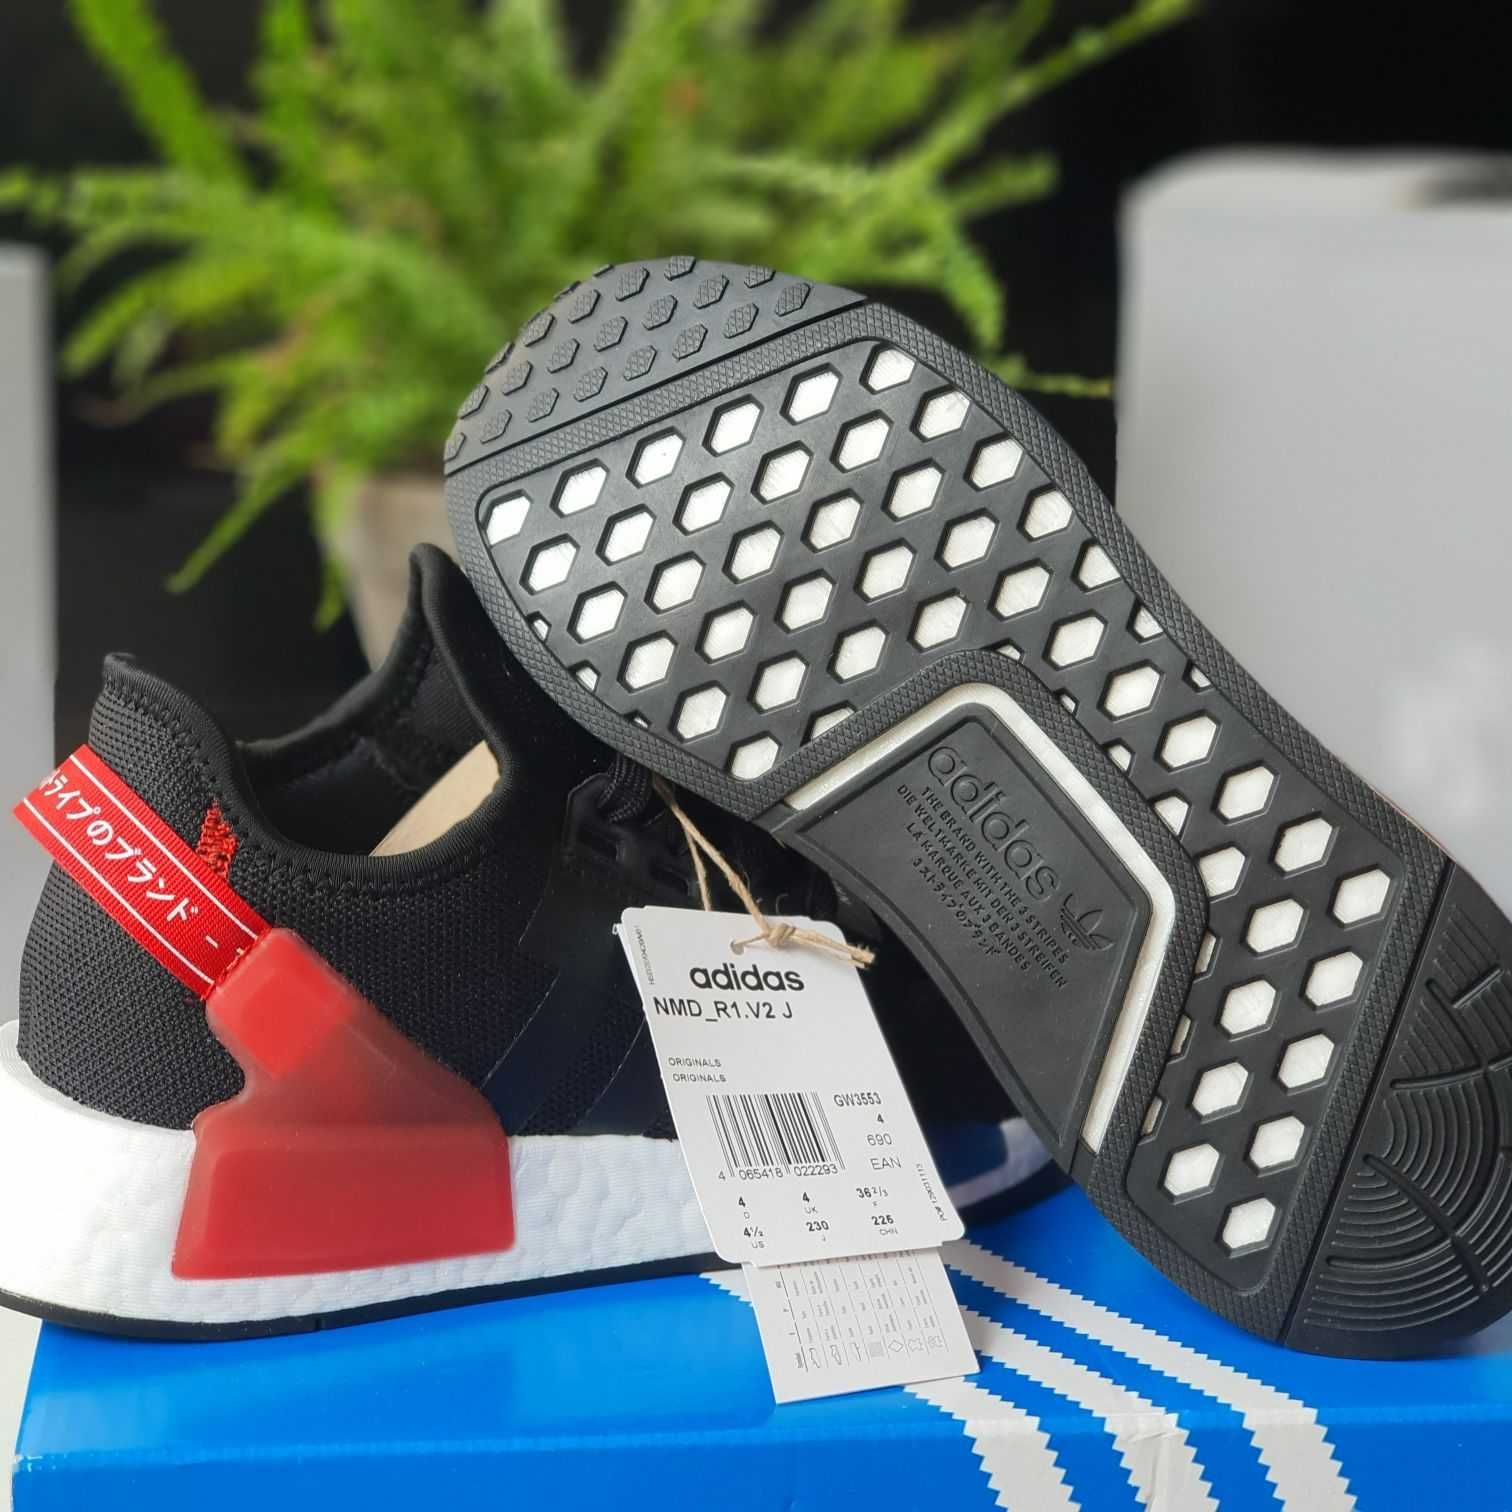 Buty Adidas NMD R1 V2 - czarne - 36.5 - oryginalne